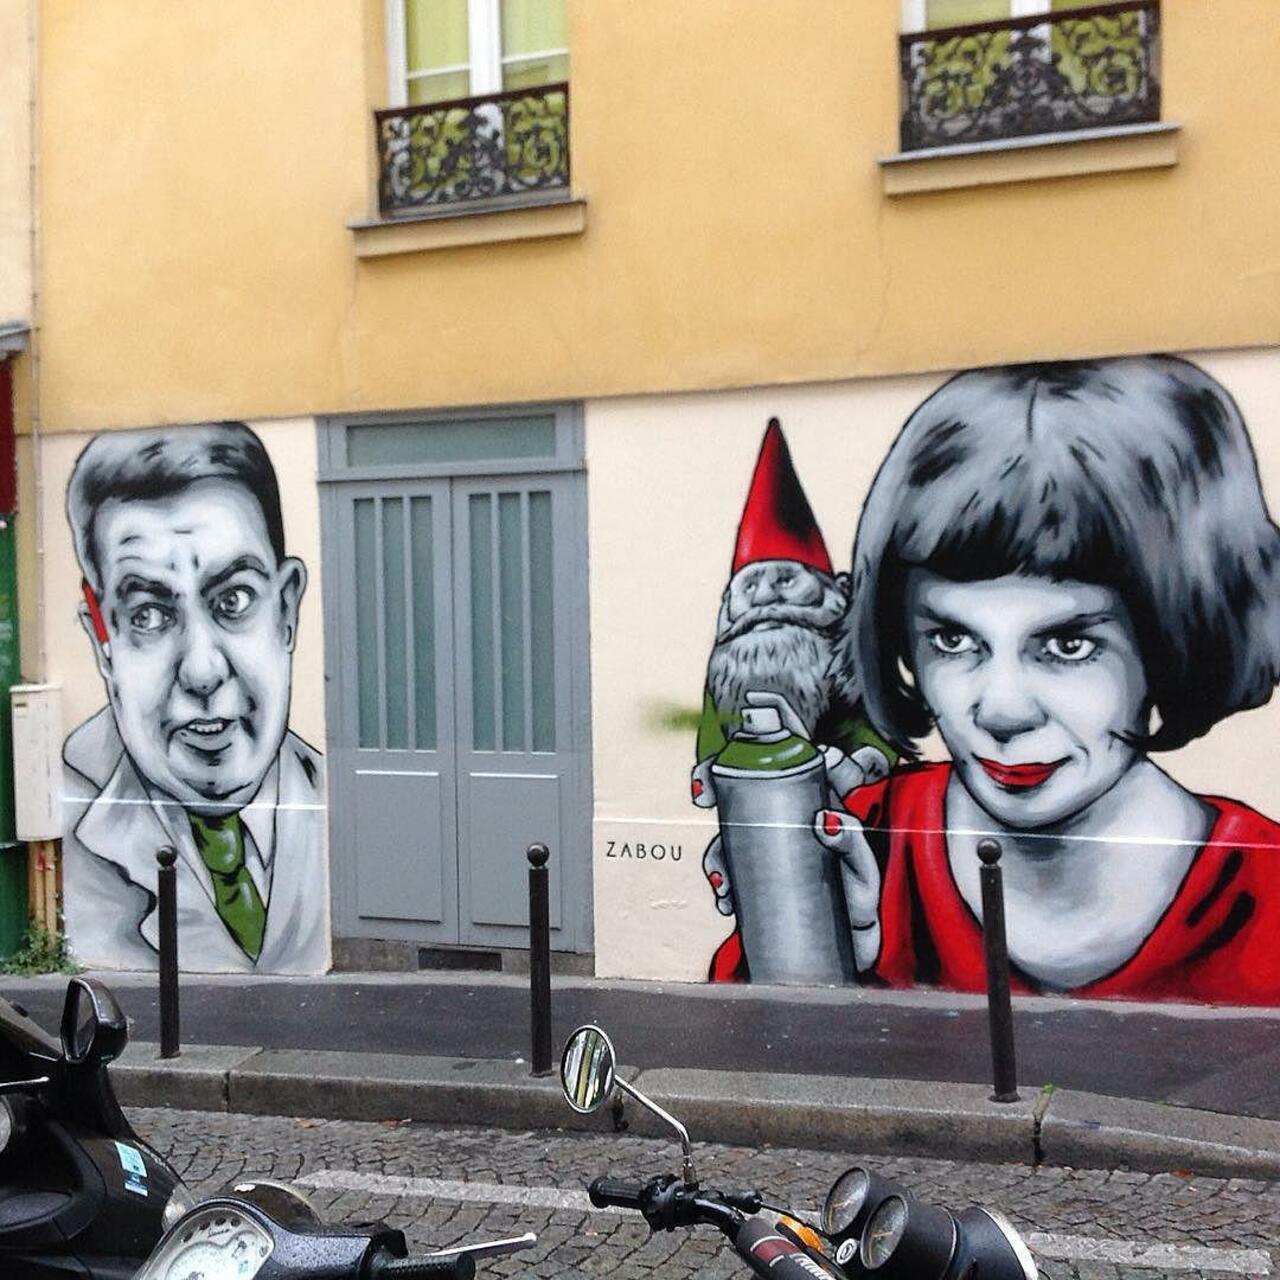 circumjacent_fr: #Paris #graffiti photo by stefetlinda http://ift.tt/1PyAf4j #StreetArt http://t.co/8bajvg5QYk